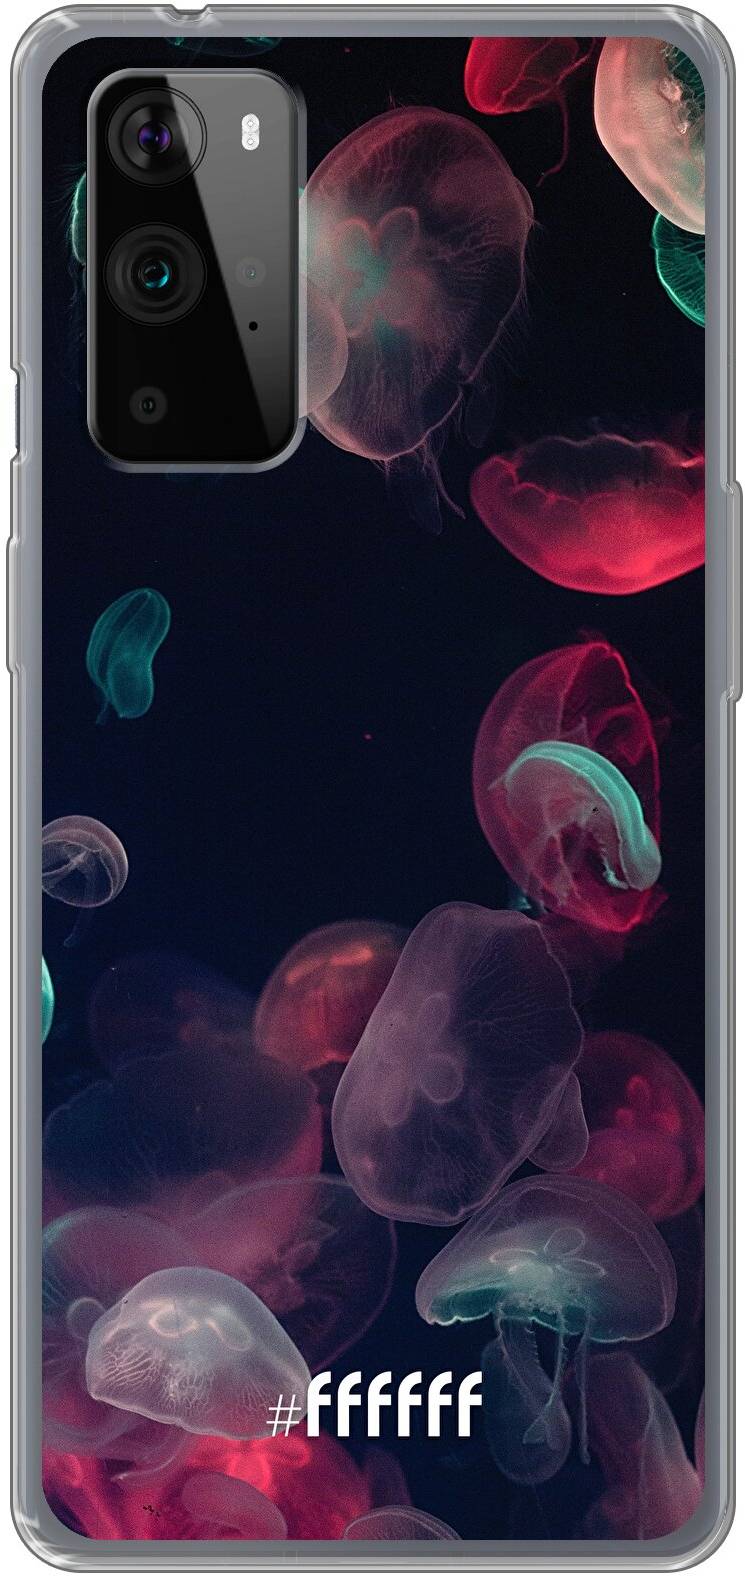 Jellyfish Bloom 9 Pro